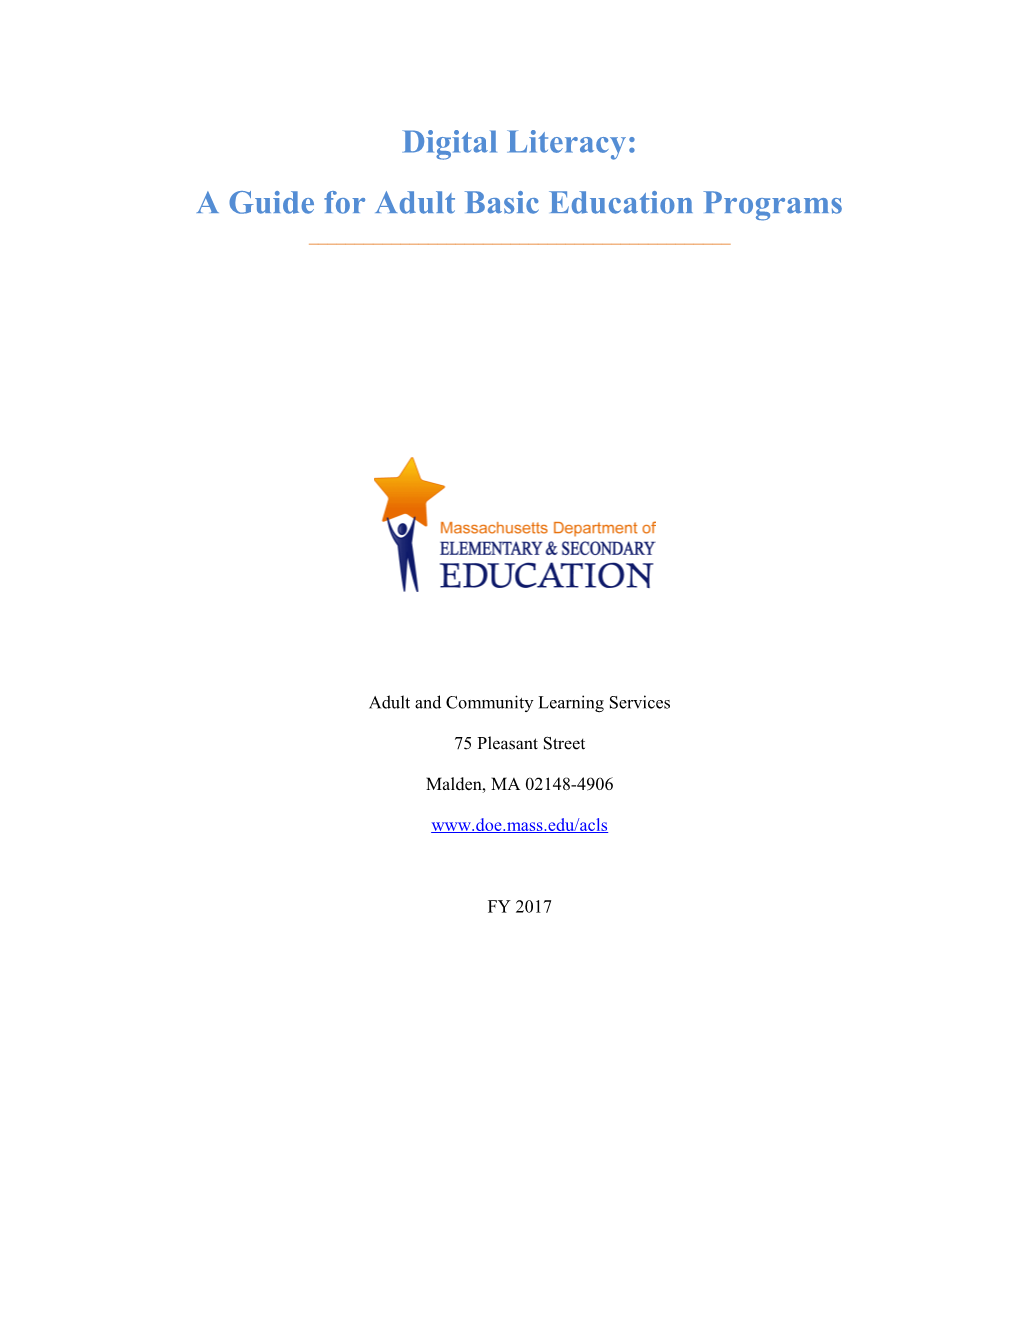 Digital Literacy Guide For Adult Basic Education Programs